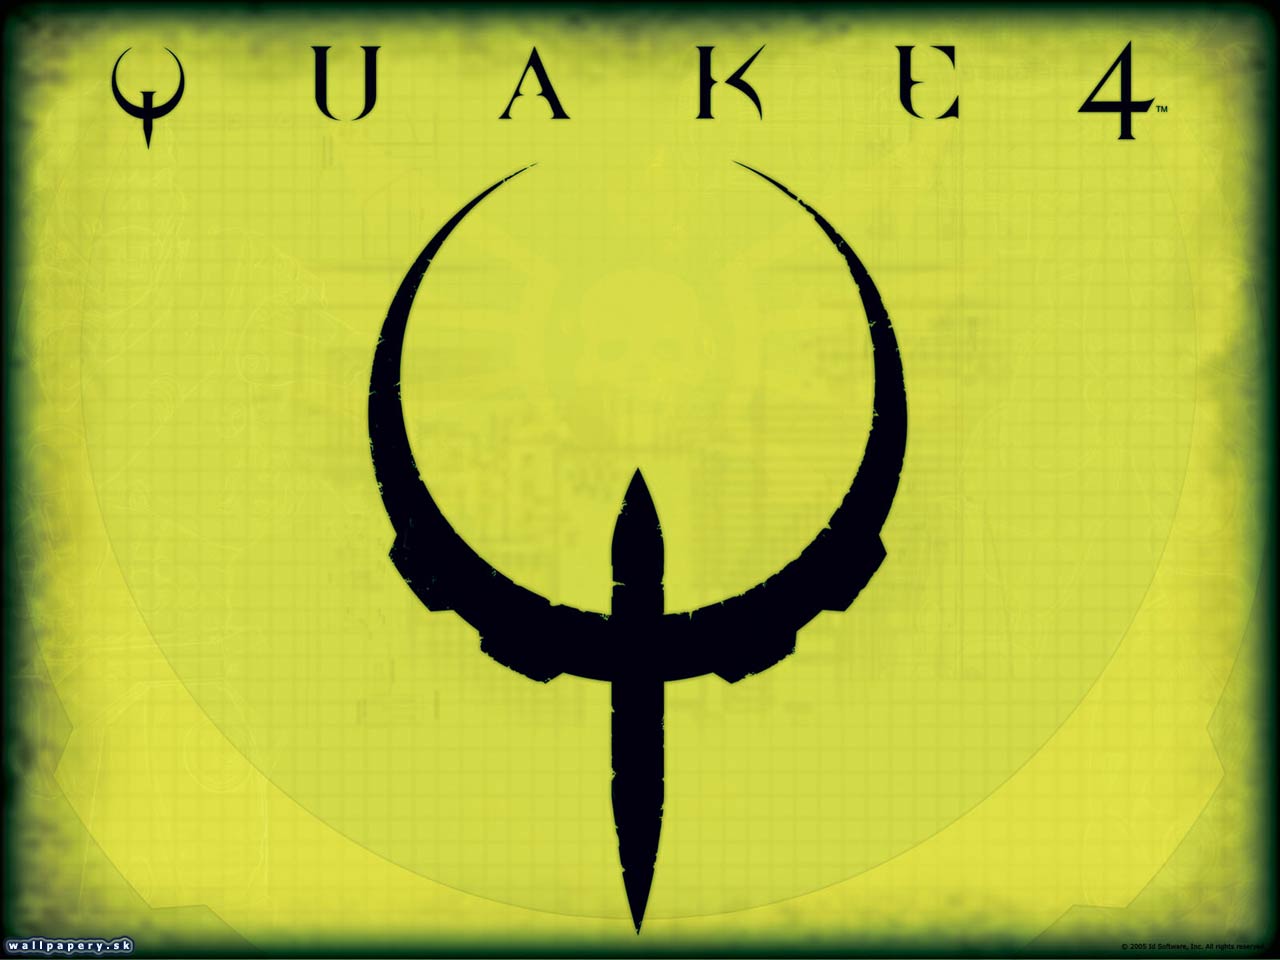 Quake 4 - wallpaper 29